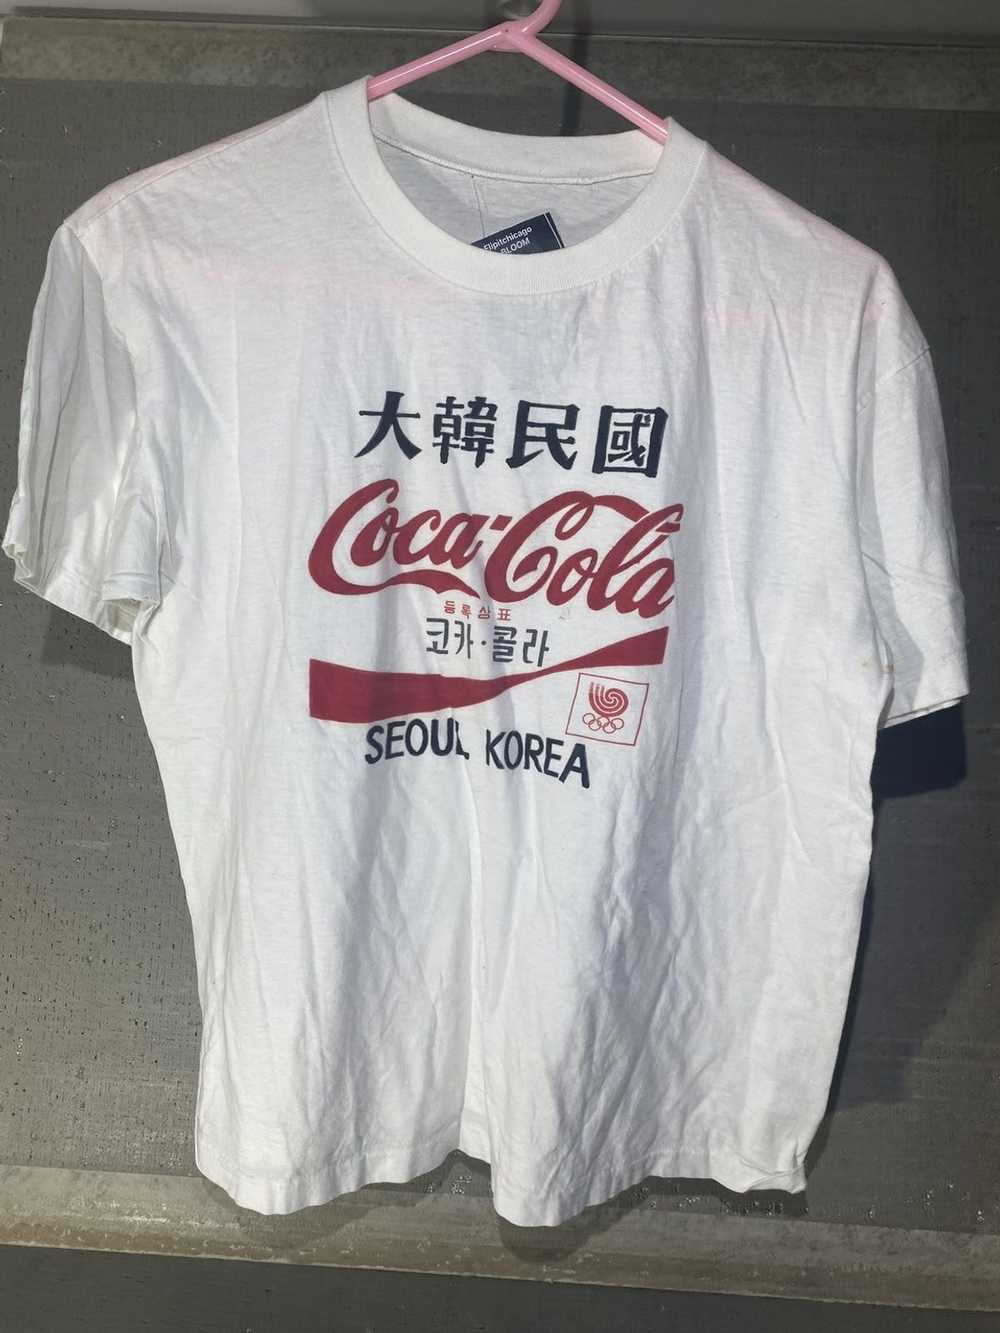 Vintage South Korea Coca-Cola Shirt - image 1